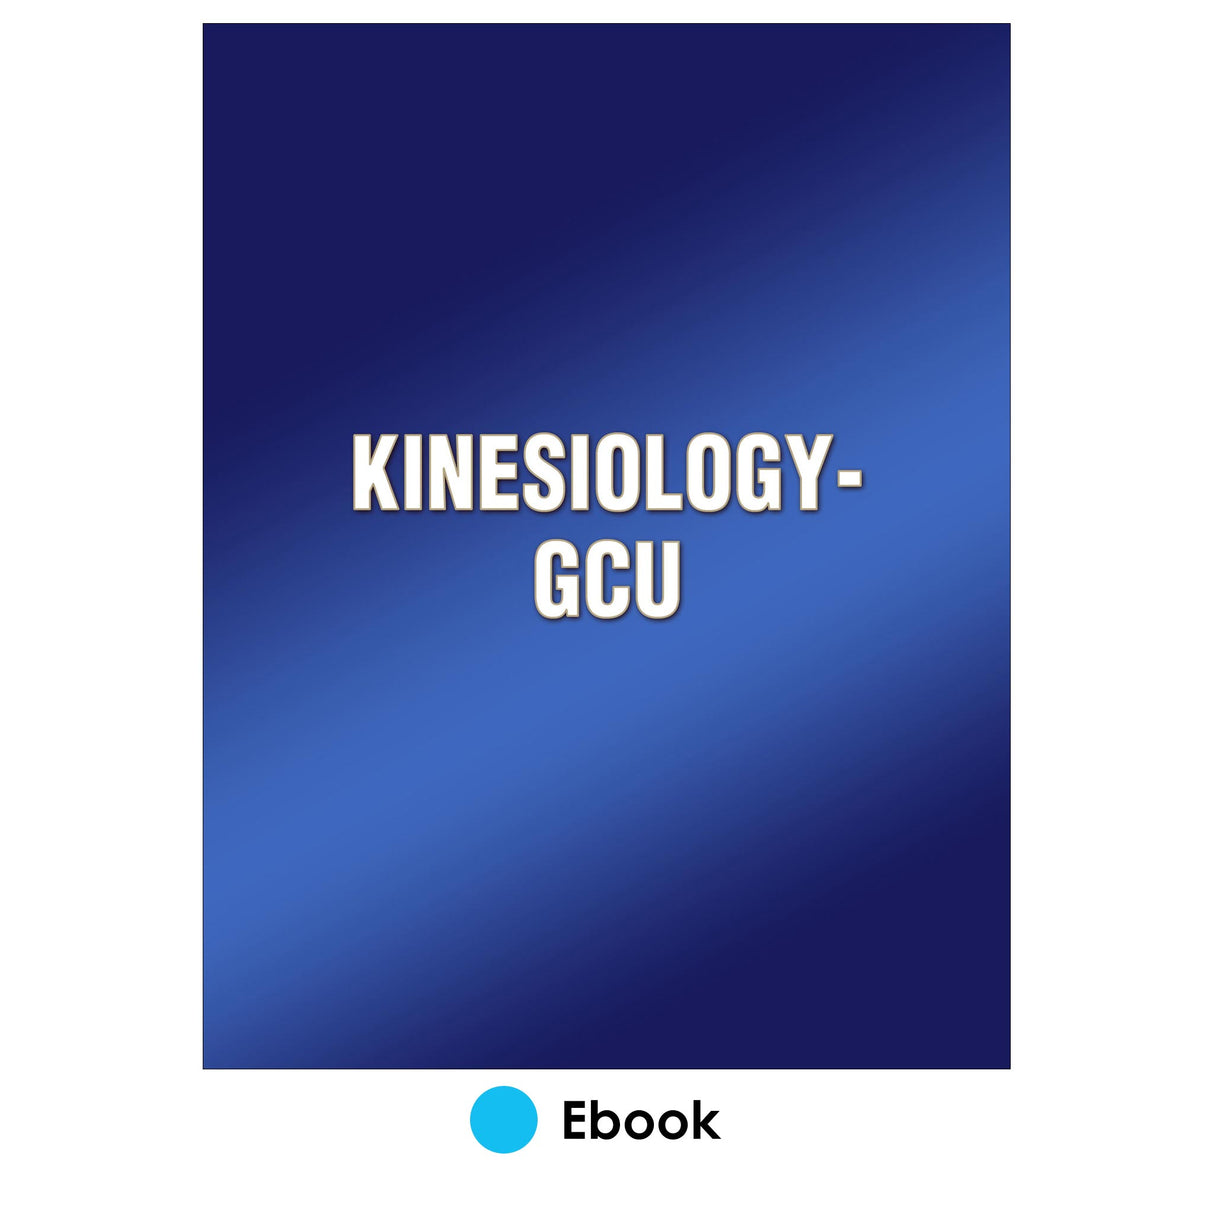 Kinesiology-GCU